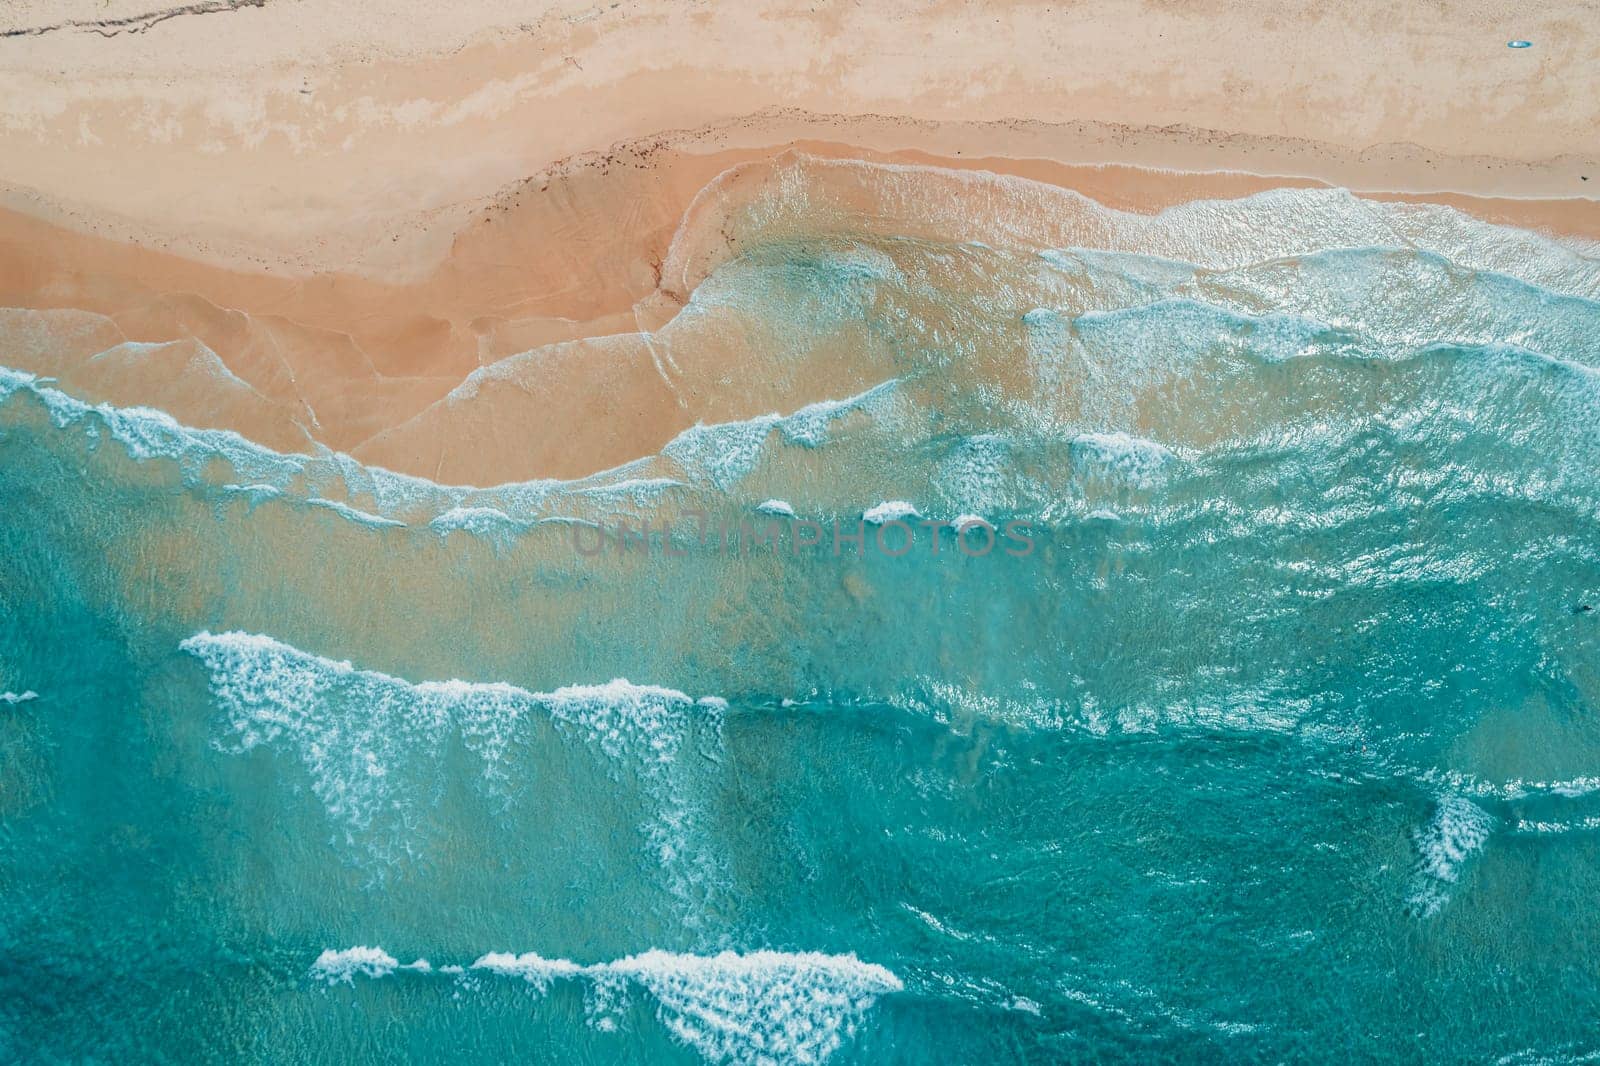 Aerial top view of turquoise ocean wave reaching the coastline.